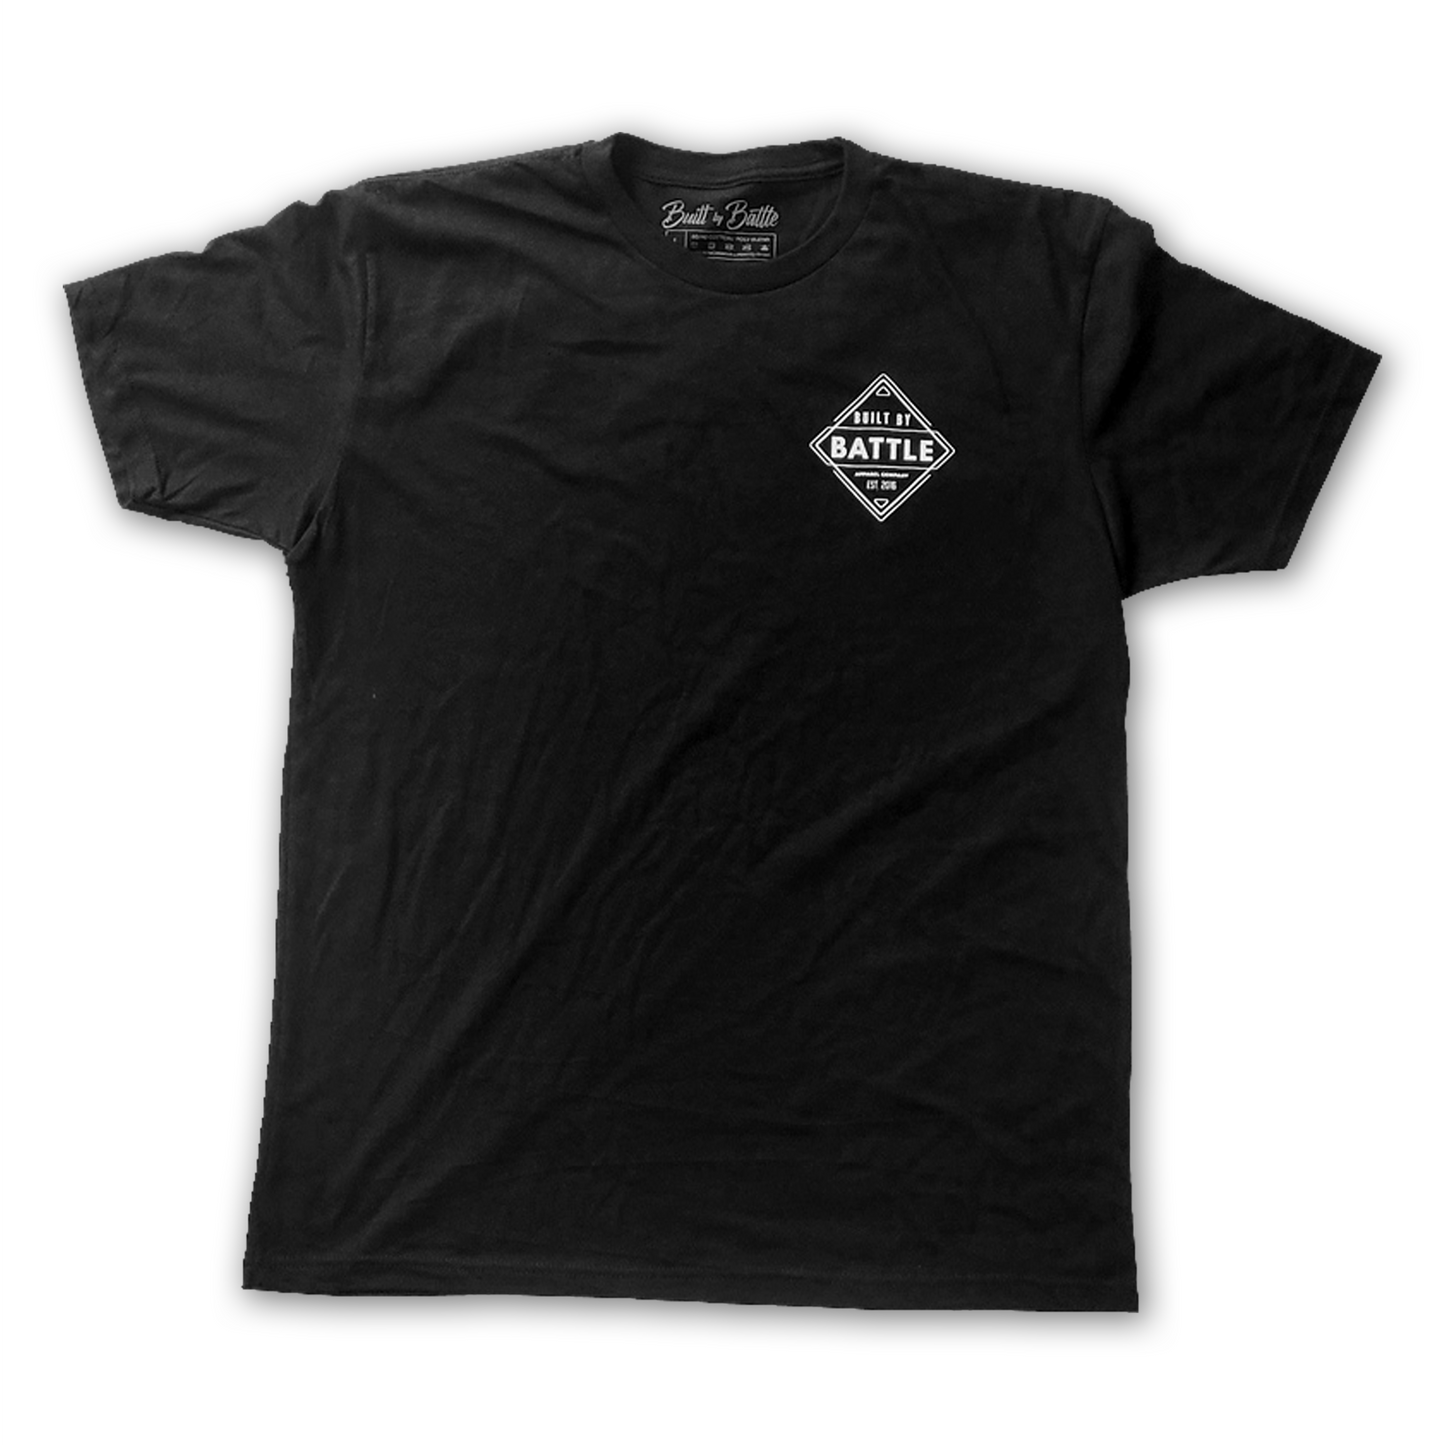 Built By Battle Unisex Diamond T-shirt Black